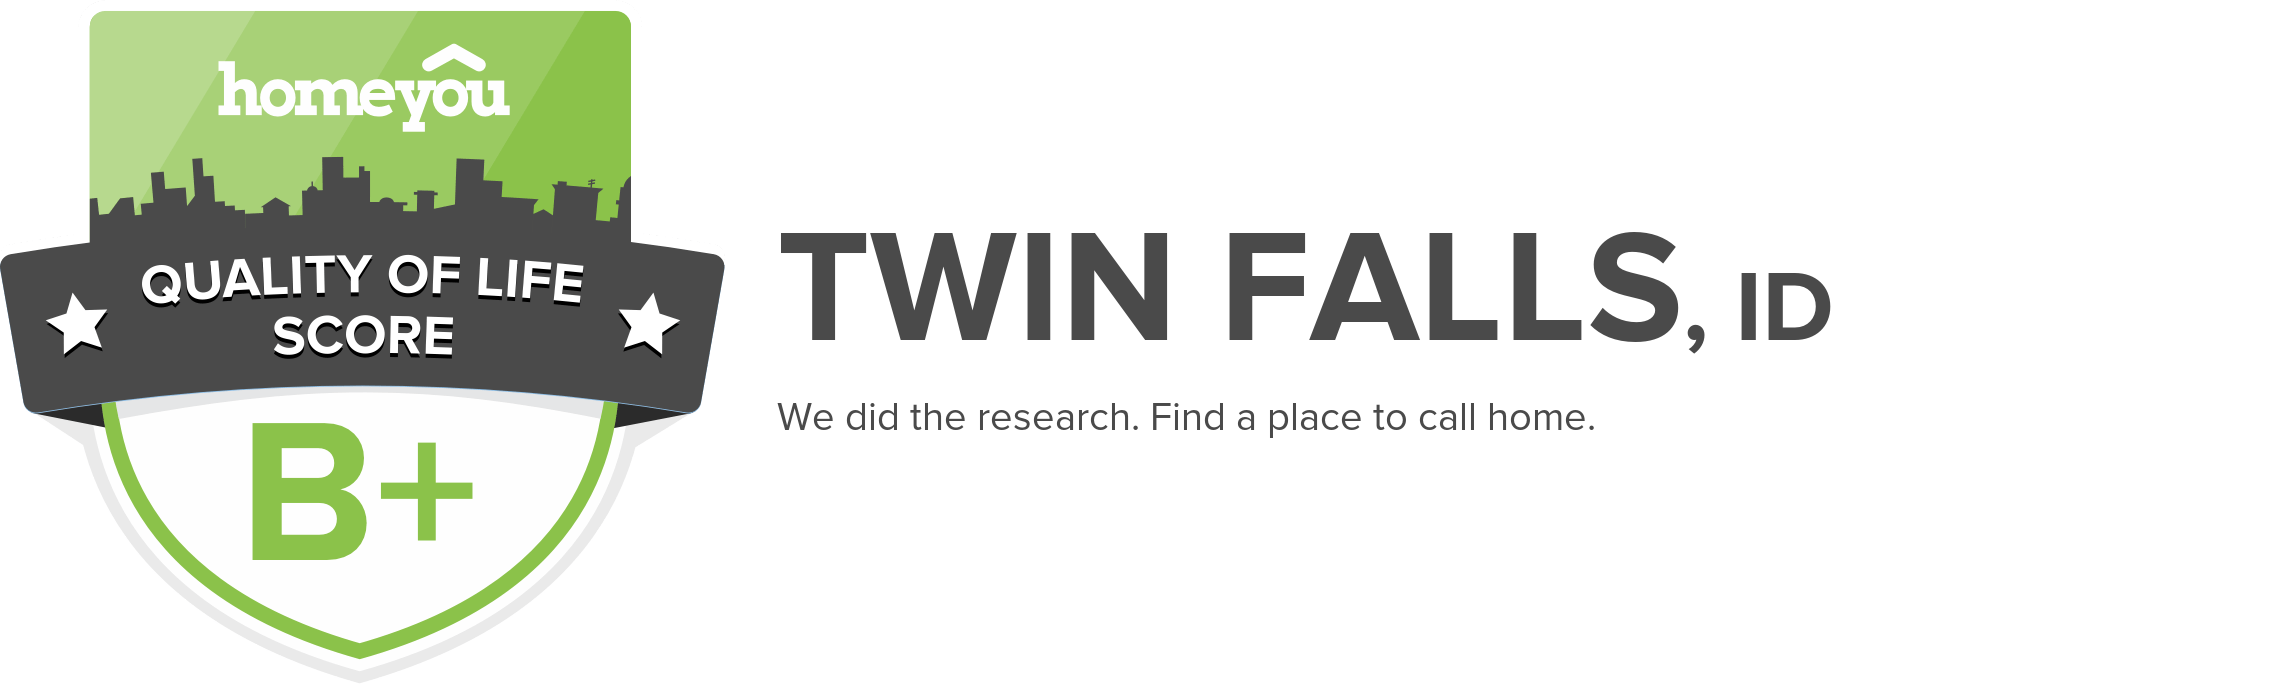 Twin Falls, ID